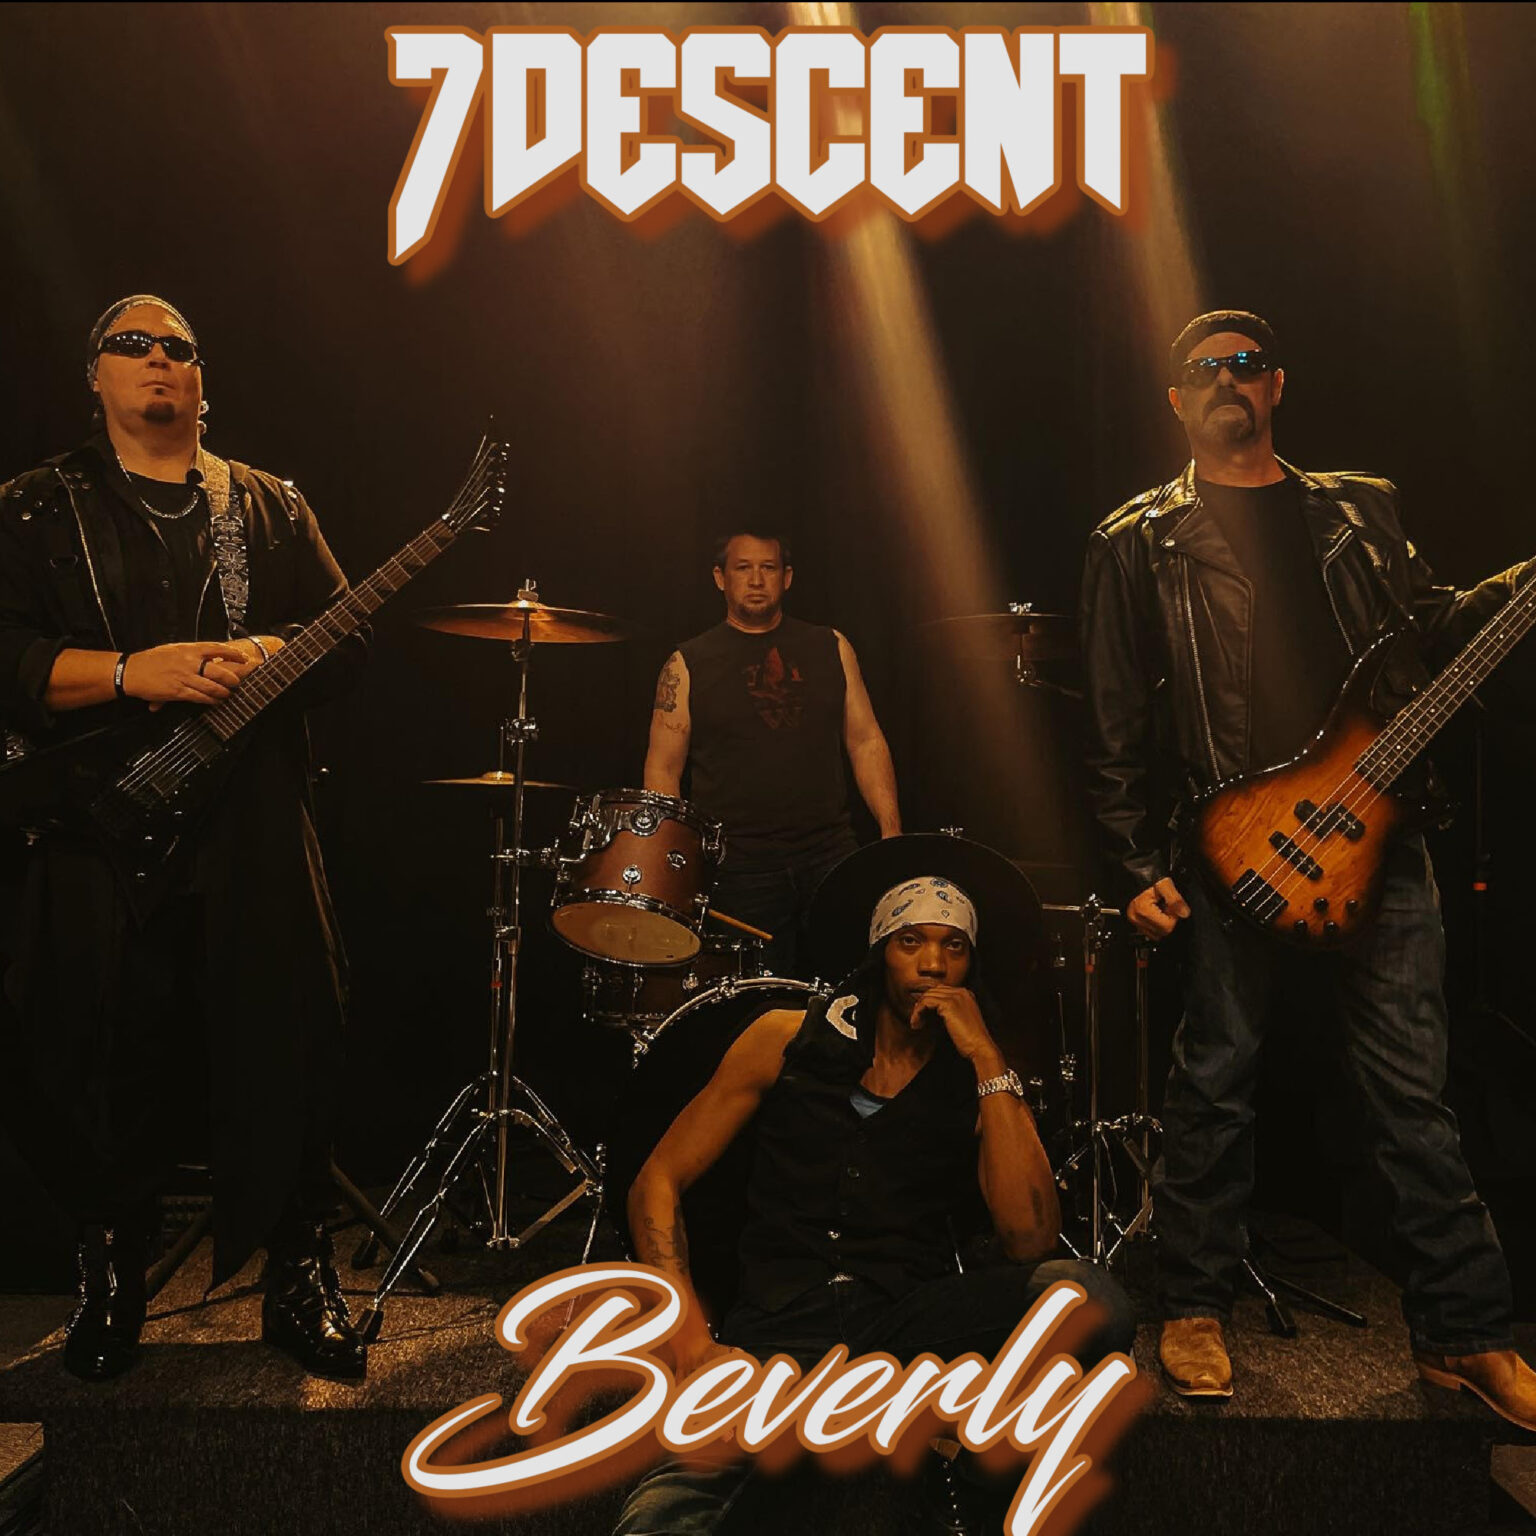 Rising Rock Sensation 7Descent Releases Debut Single "Beverly"